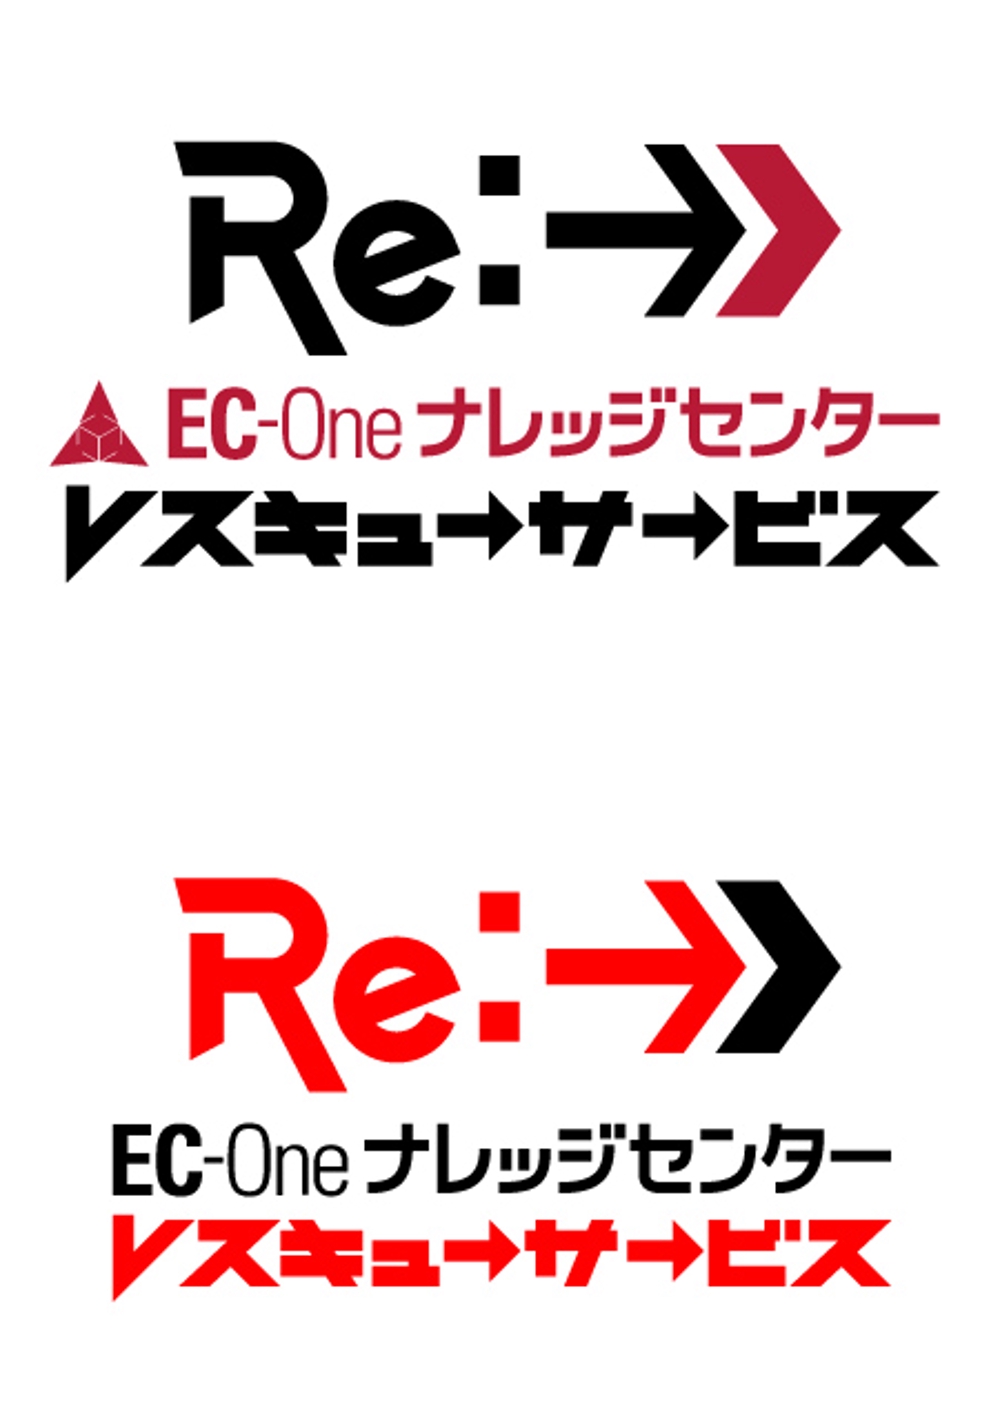 rescue_logo01.jpg